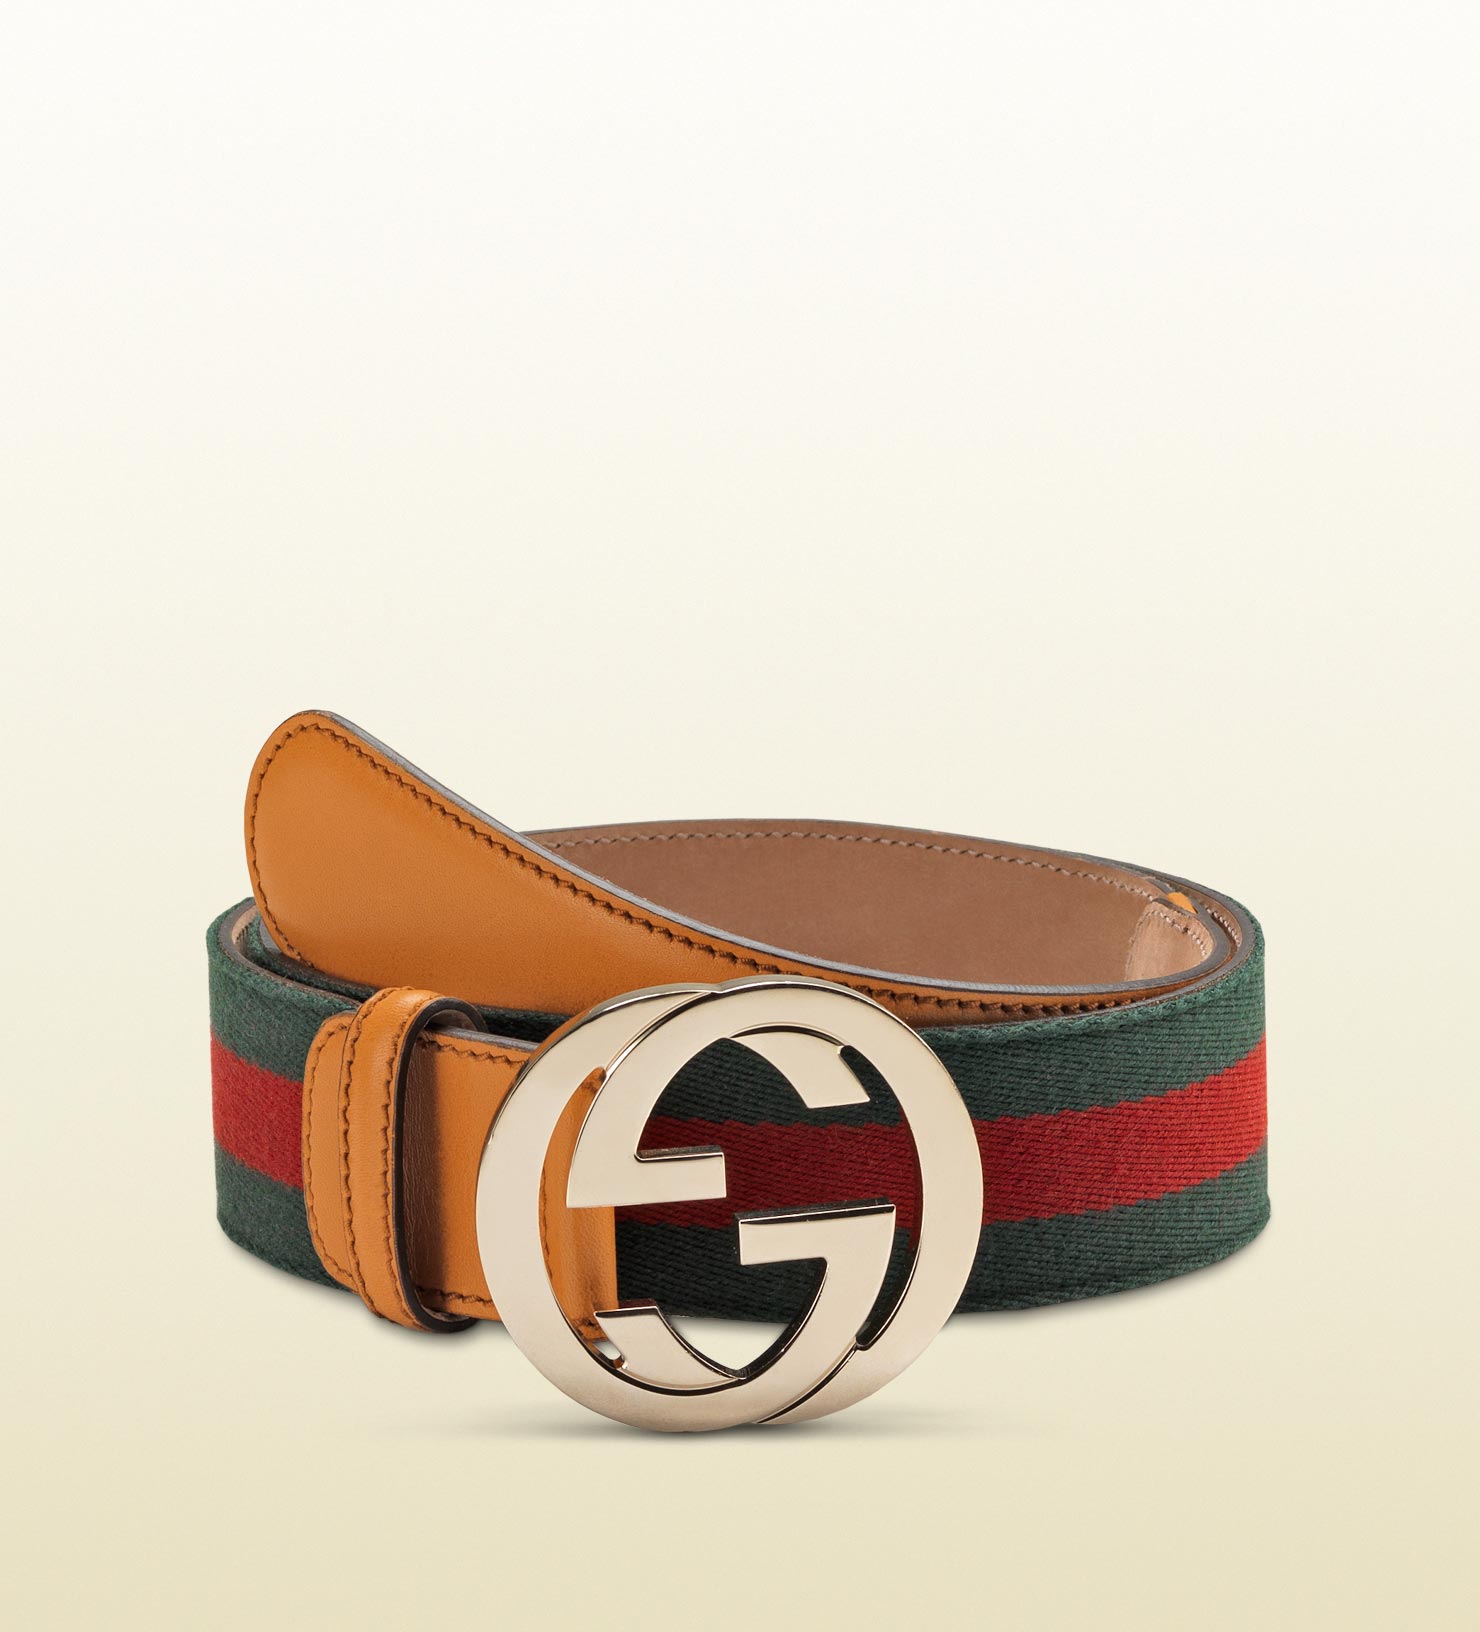 Gucci Signature Web Belt With Interlocking G Buckle in ...